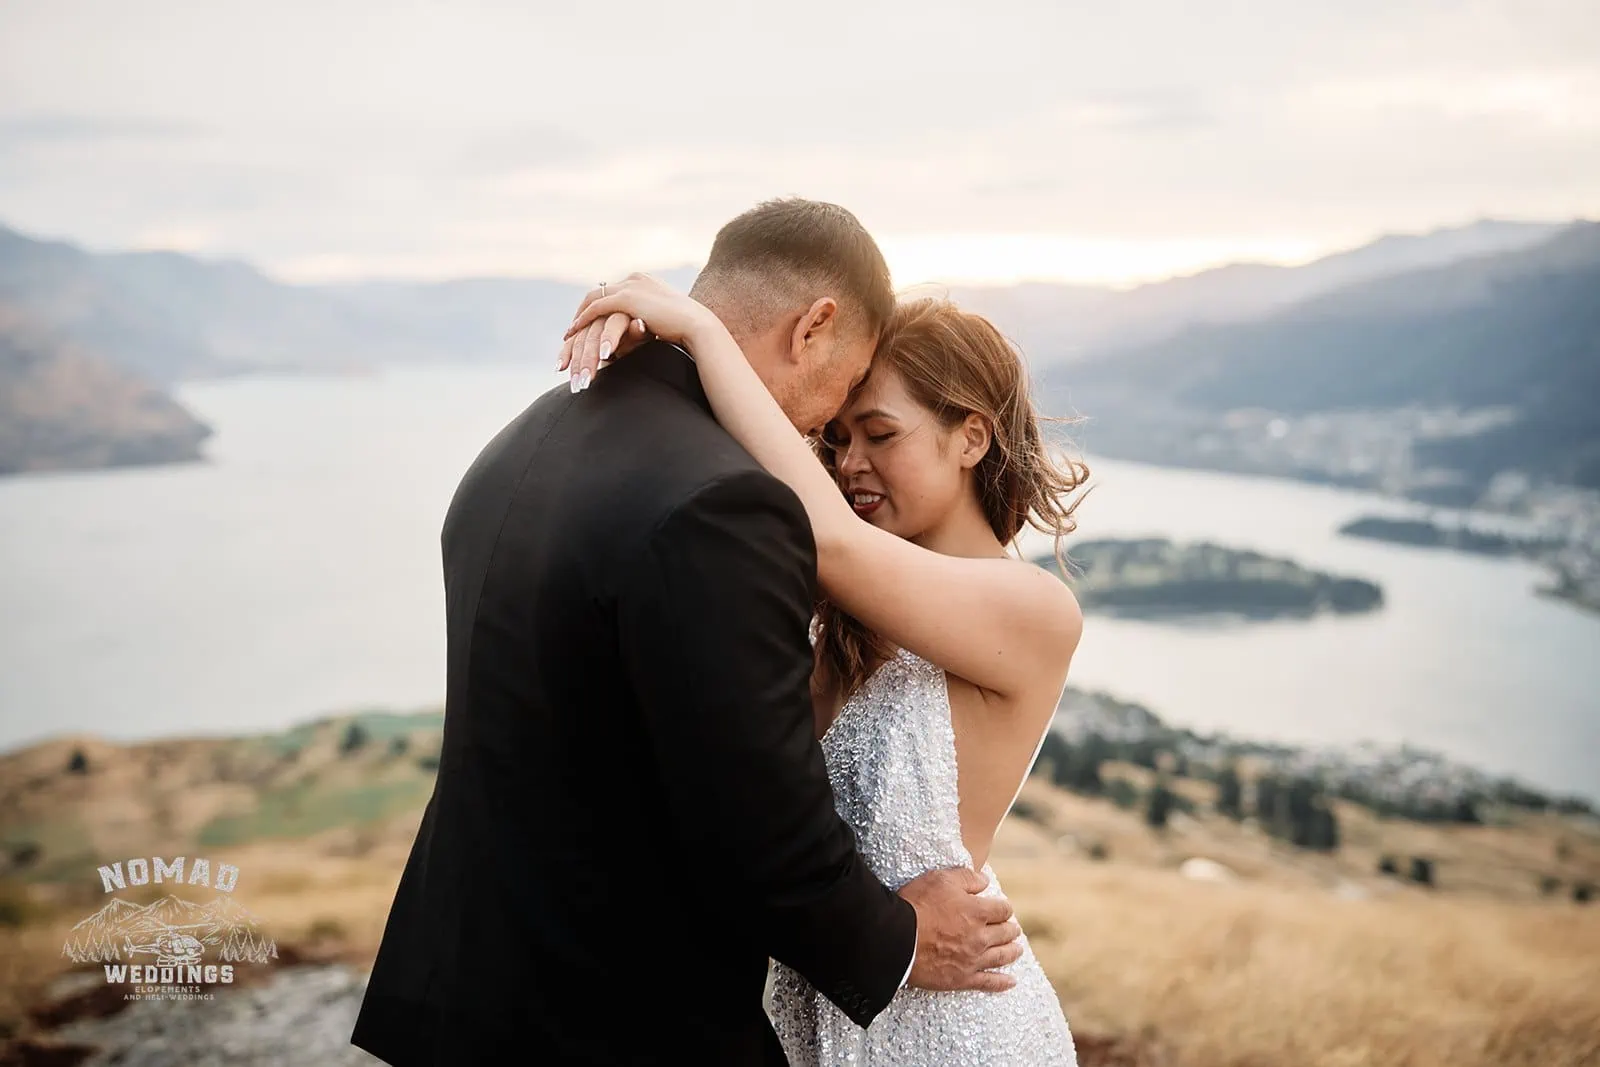 Nhi and Nicholas' pre-wedding shoot atop Queenstown's Cecil Peak overlooking lake Wanaka in NZ.